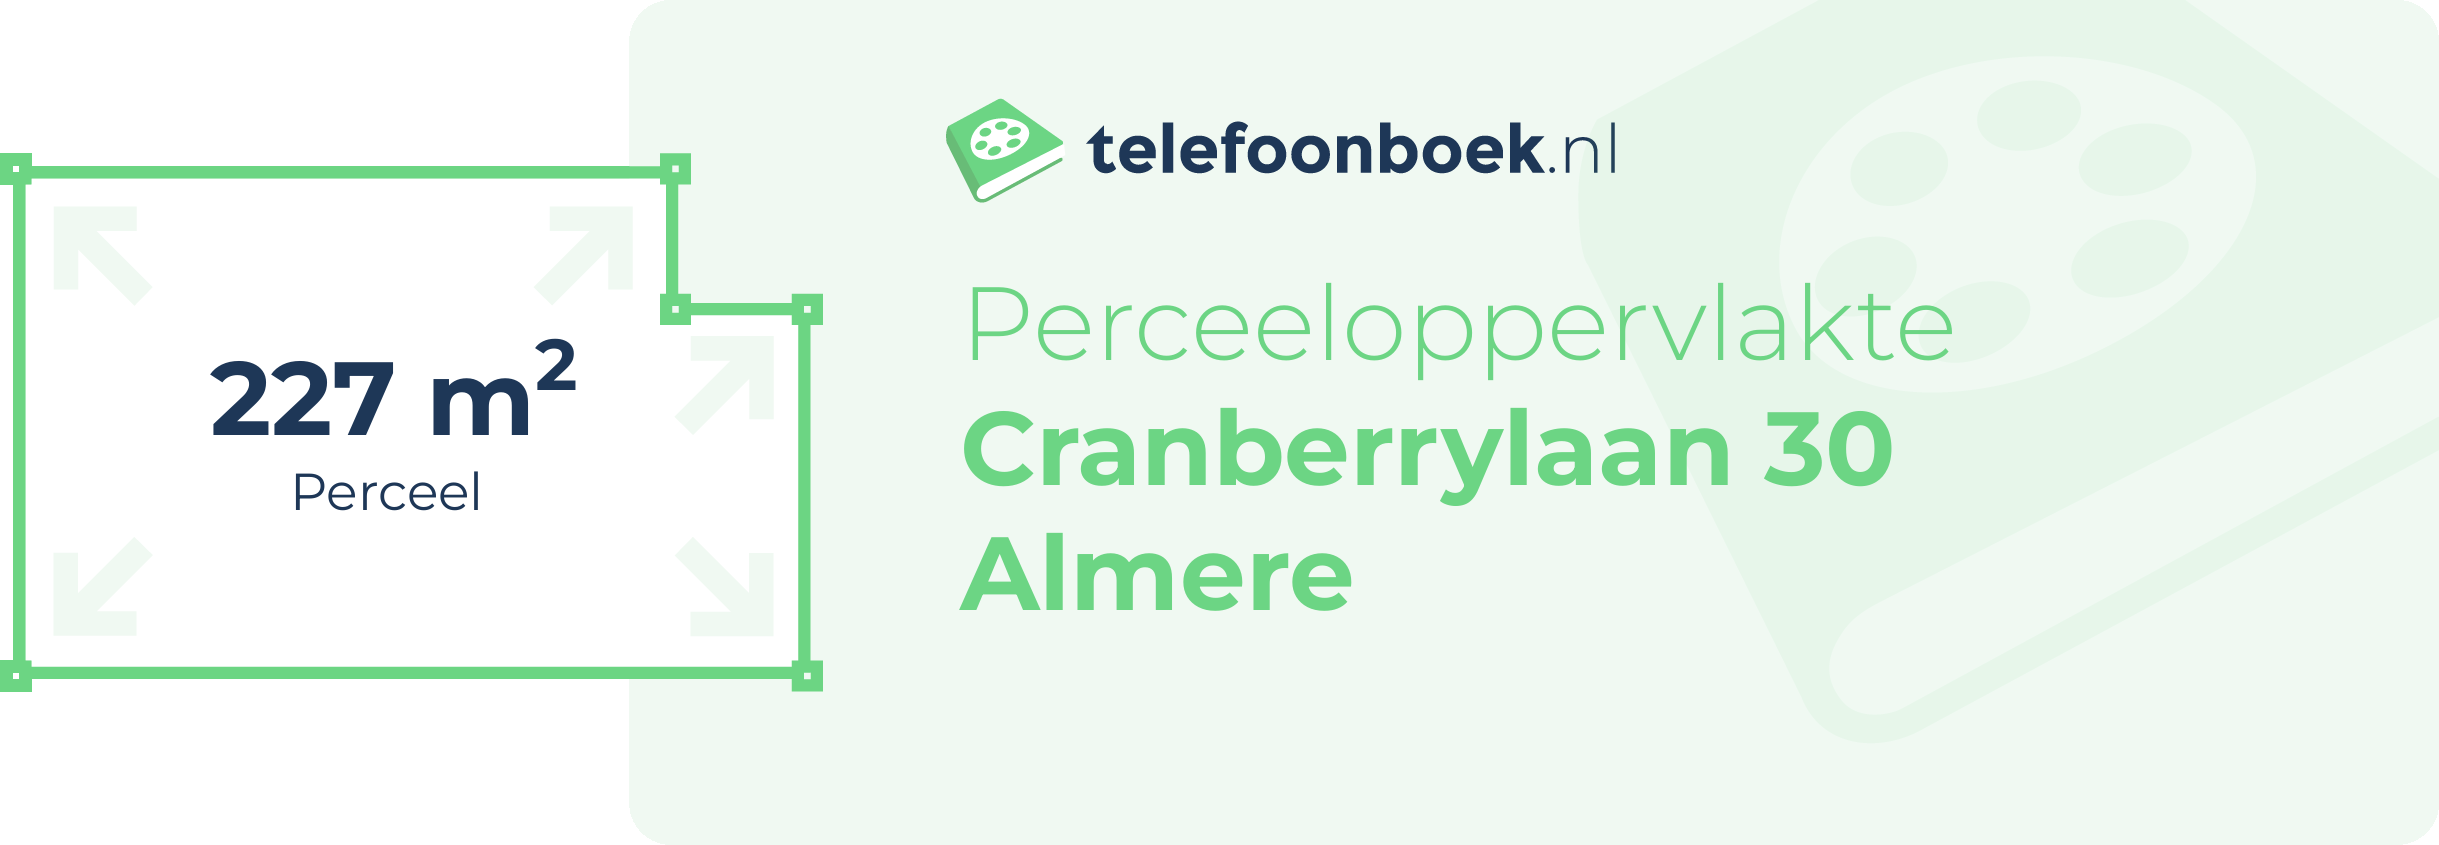 Perceeloppervlakte Cranberrylaan 30 Almere